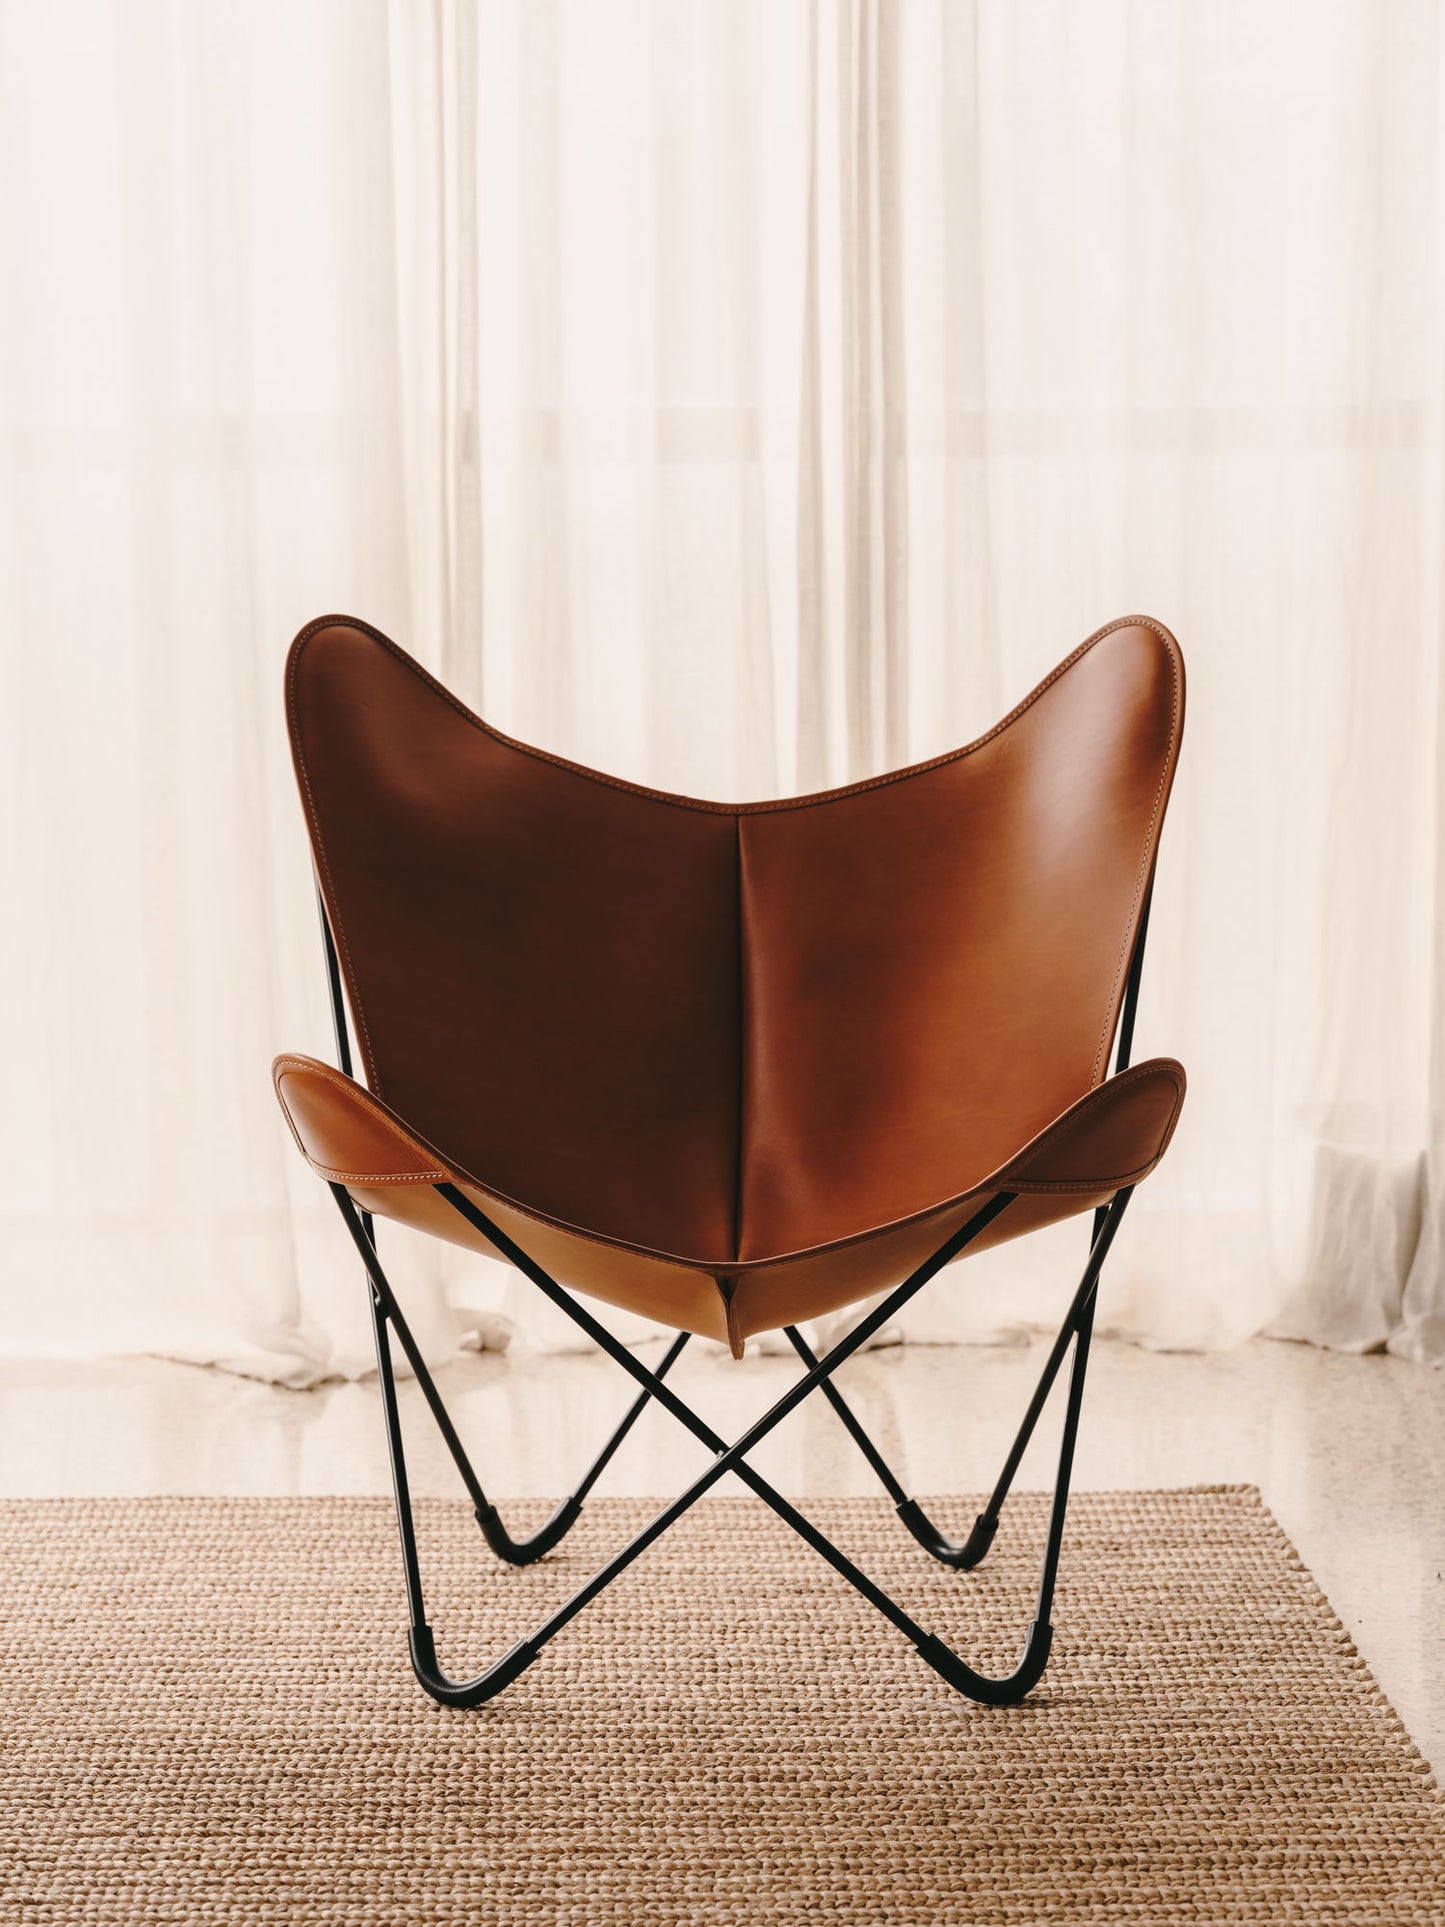 BONET BKF CHAIR - Butterfly Leather Chair by Bonet, Ferrari & Kurchan